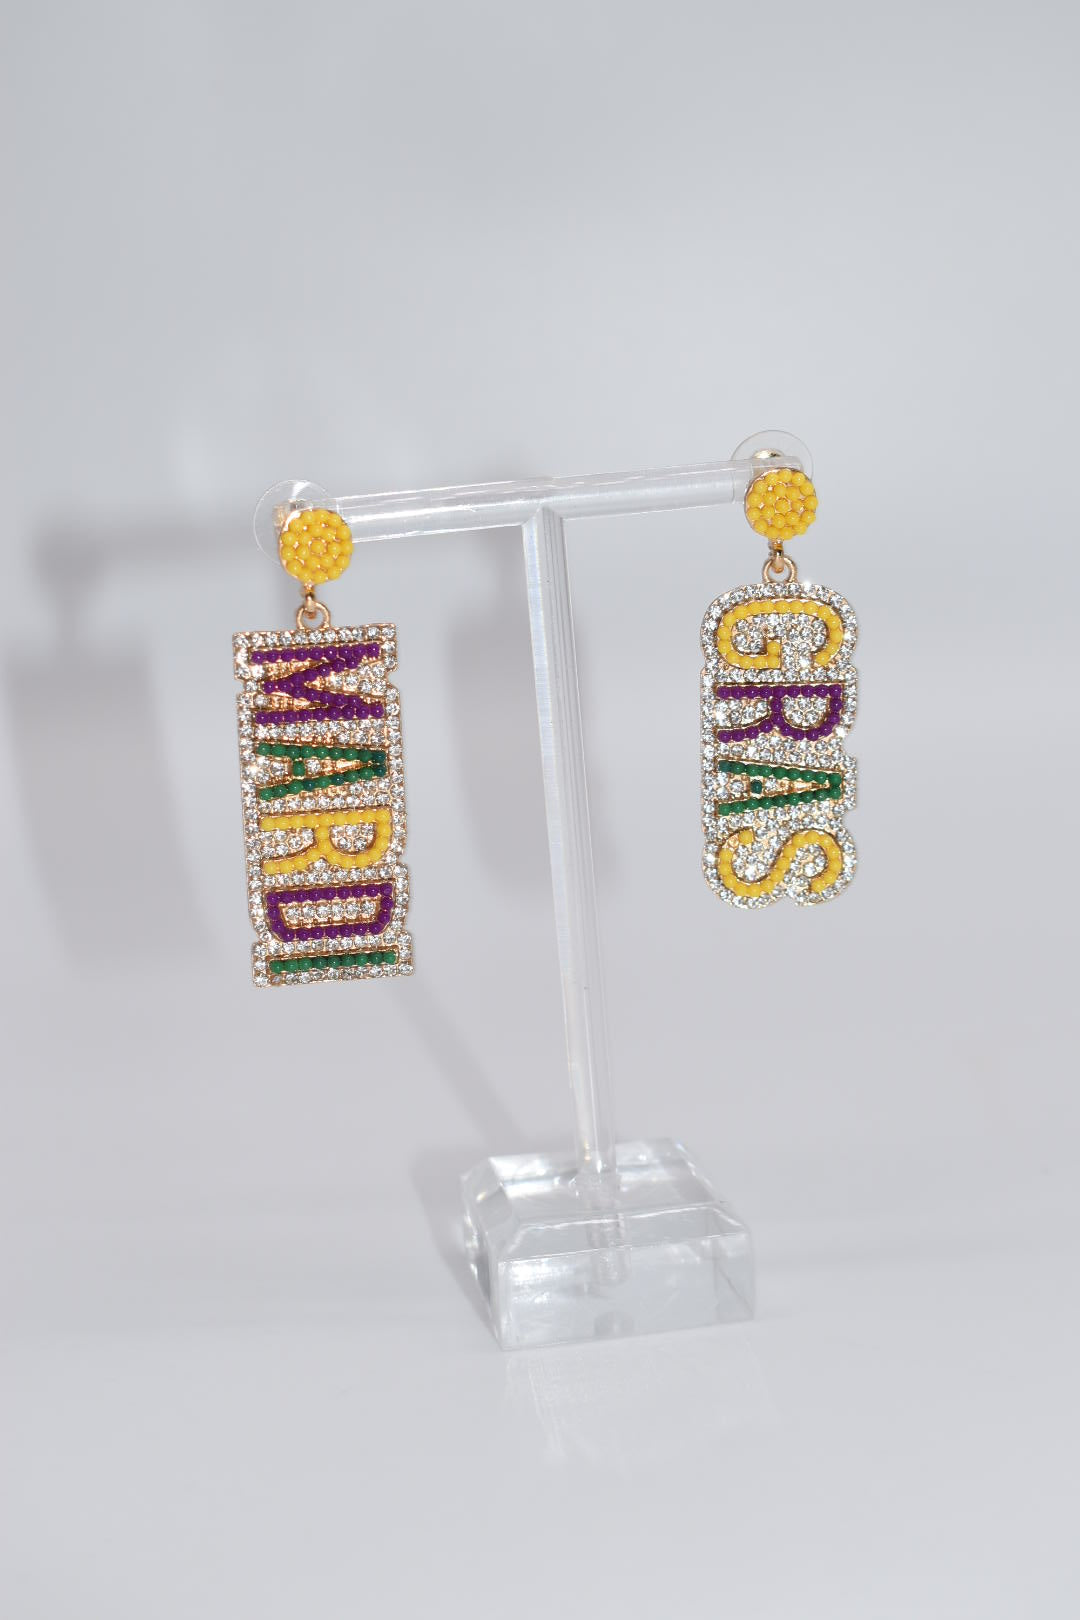 Statement Earrings: "Nothing Beads Mardi Gras" Earrings